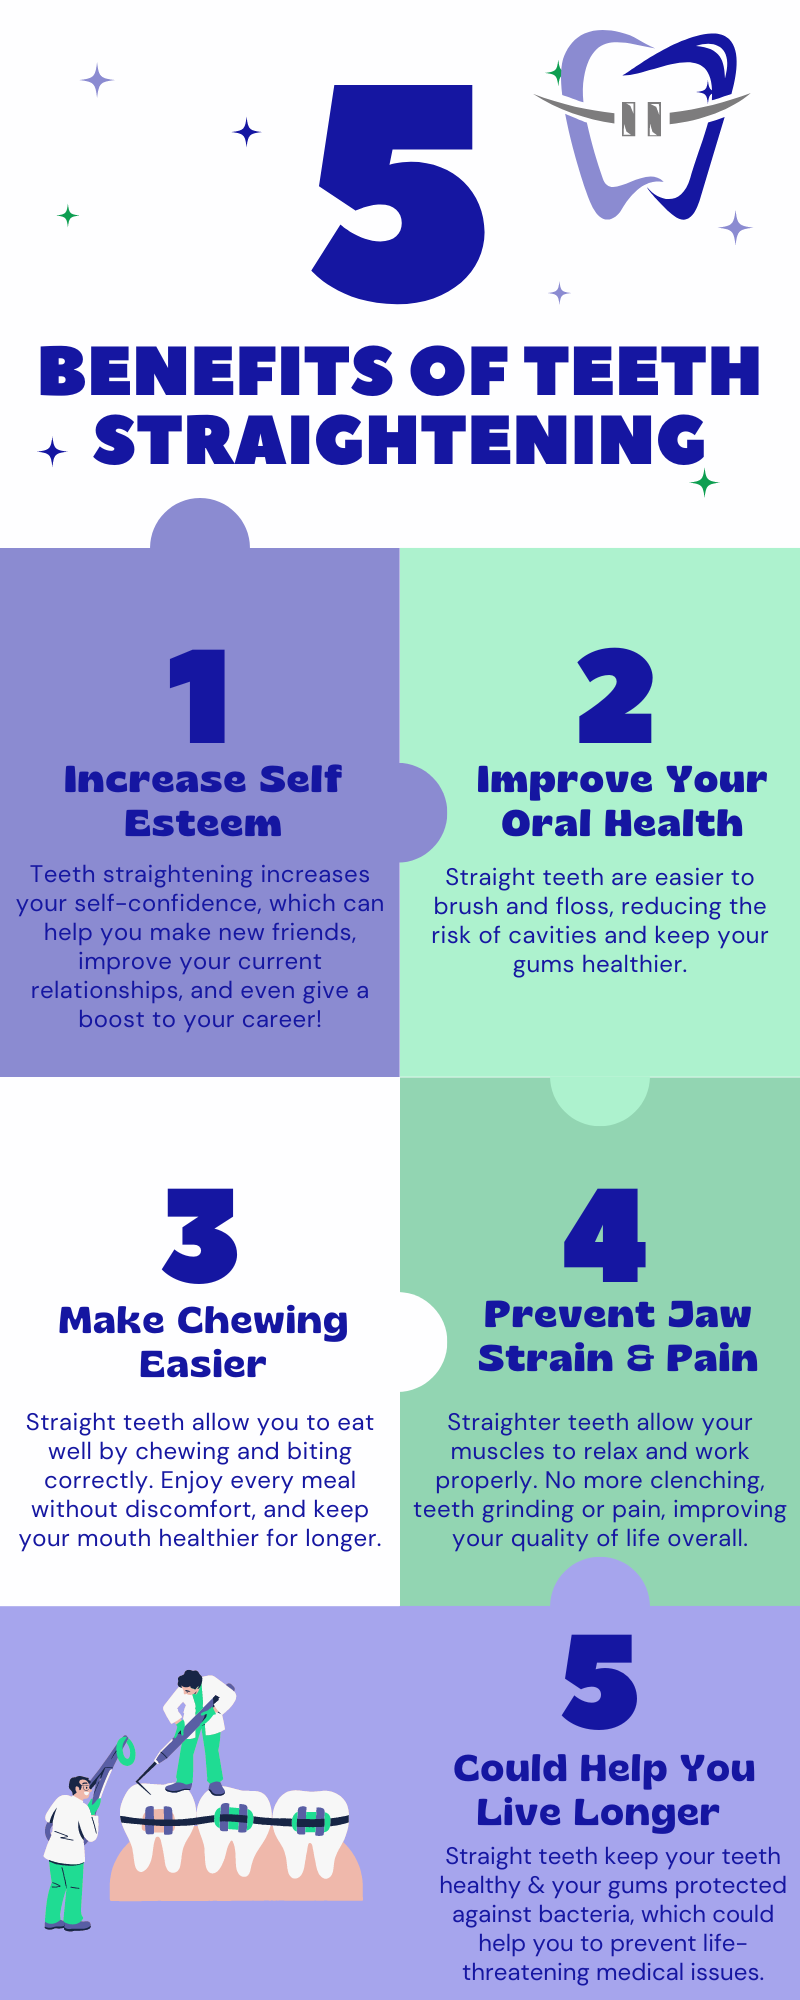 Benefits of teeth straightening - Teeth and Smiles